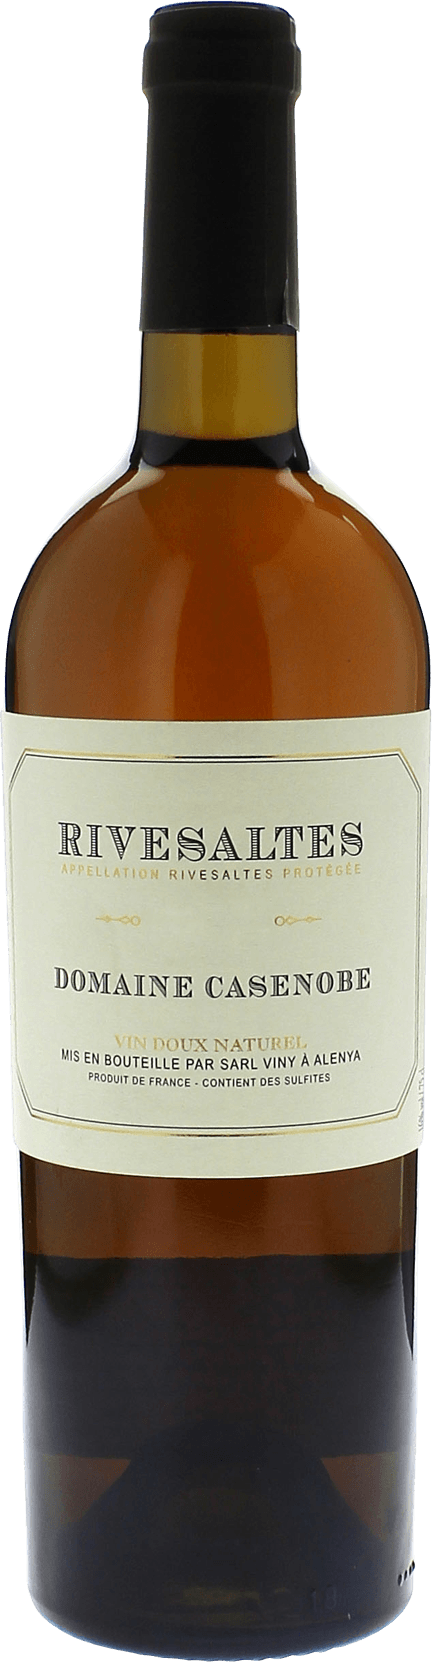 Rivesaltes domaine casenobe 1971 Vin doux naturel Rivesaltes, Vin doux naturel